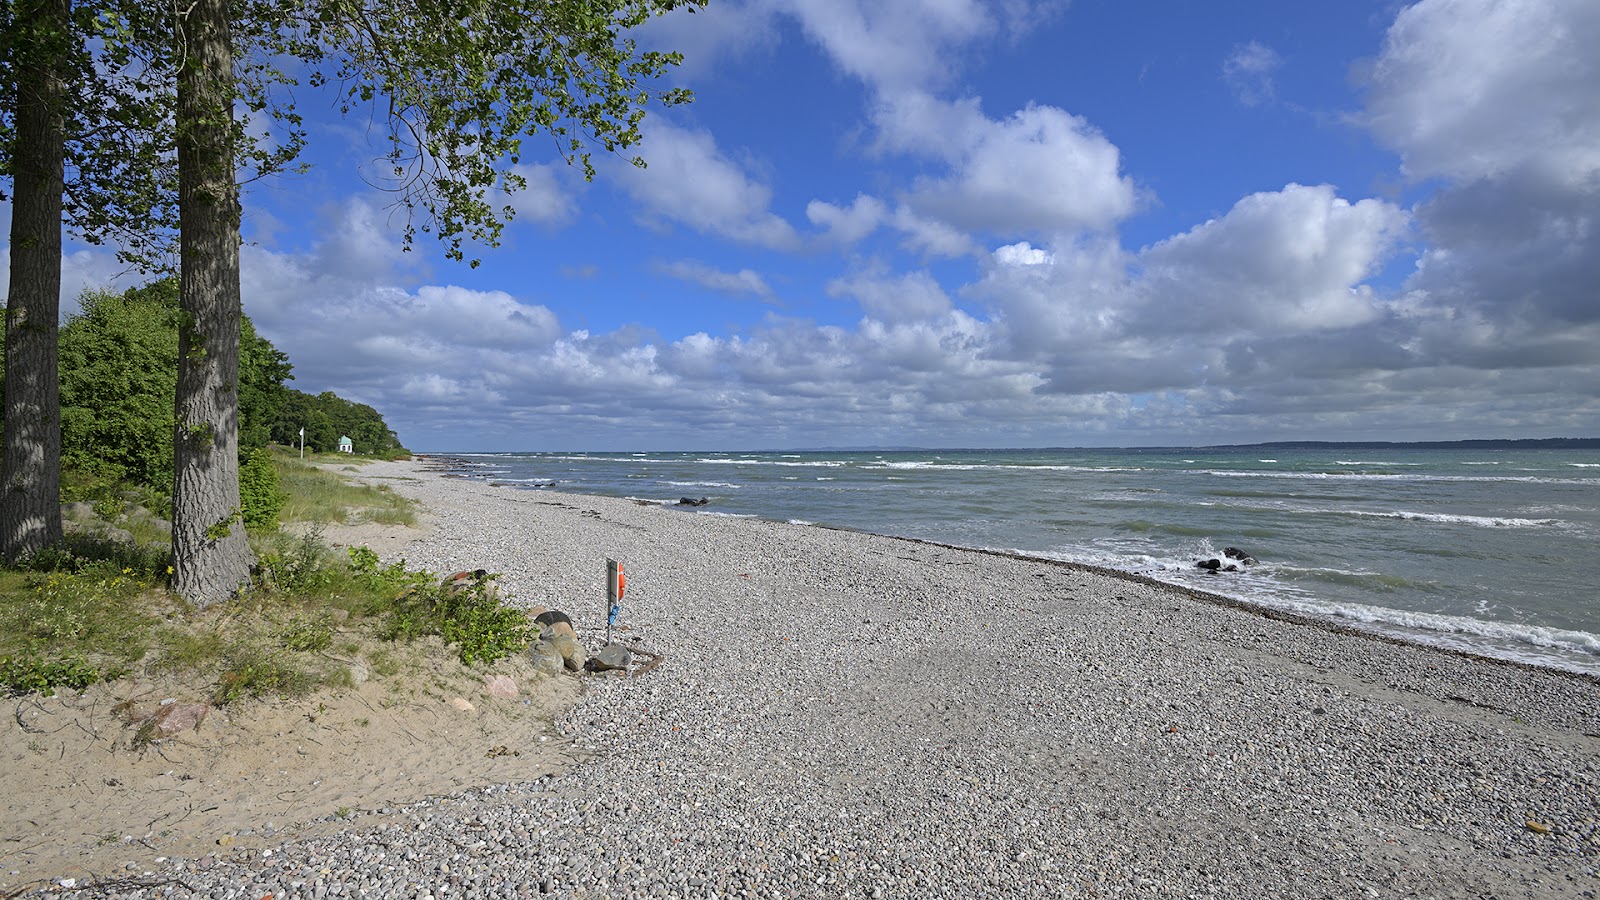 Foto de Julebek Beach - lugar popular entre os apreciadores de relaxamento